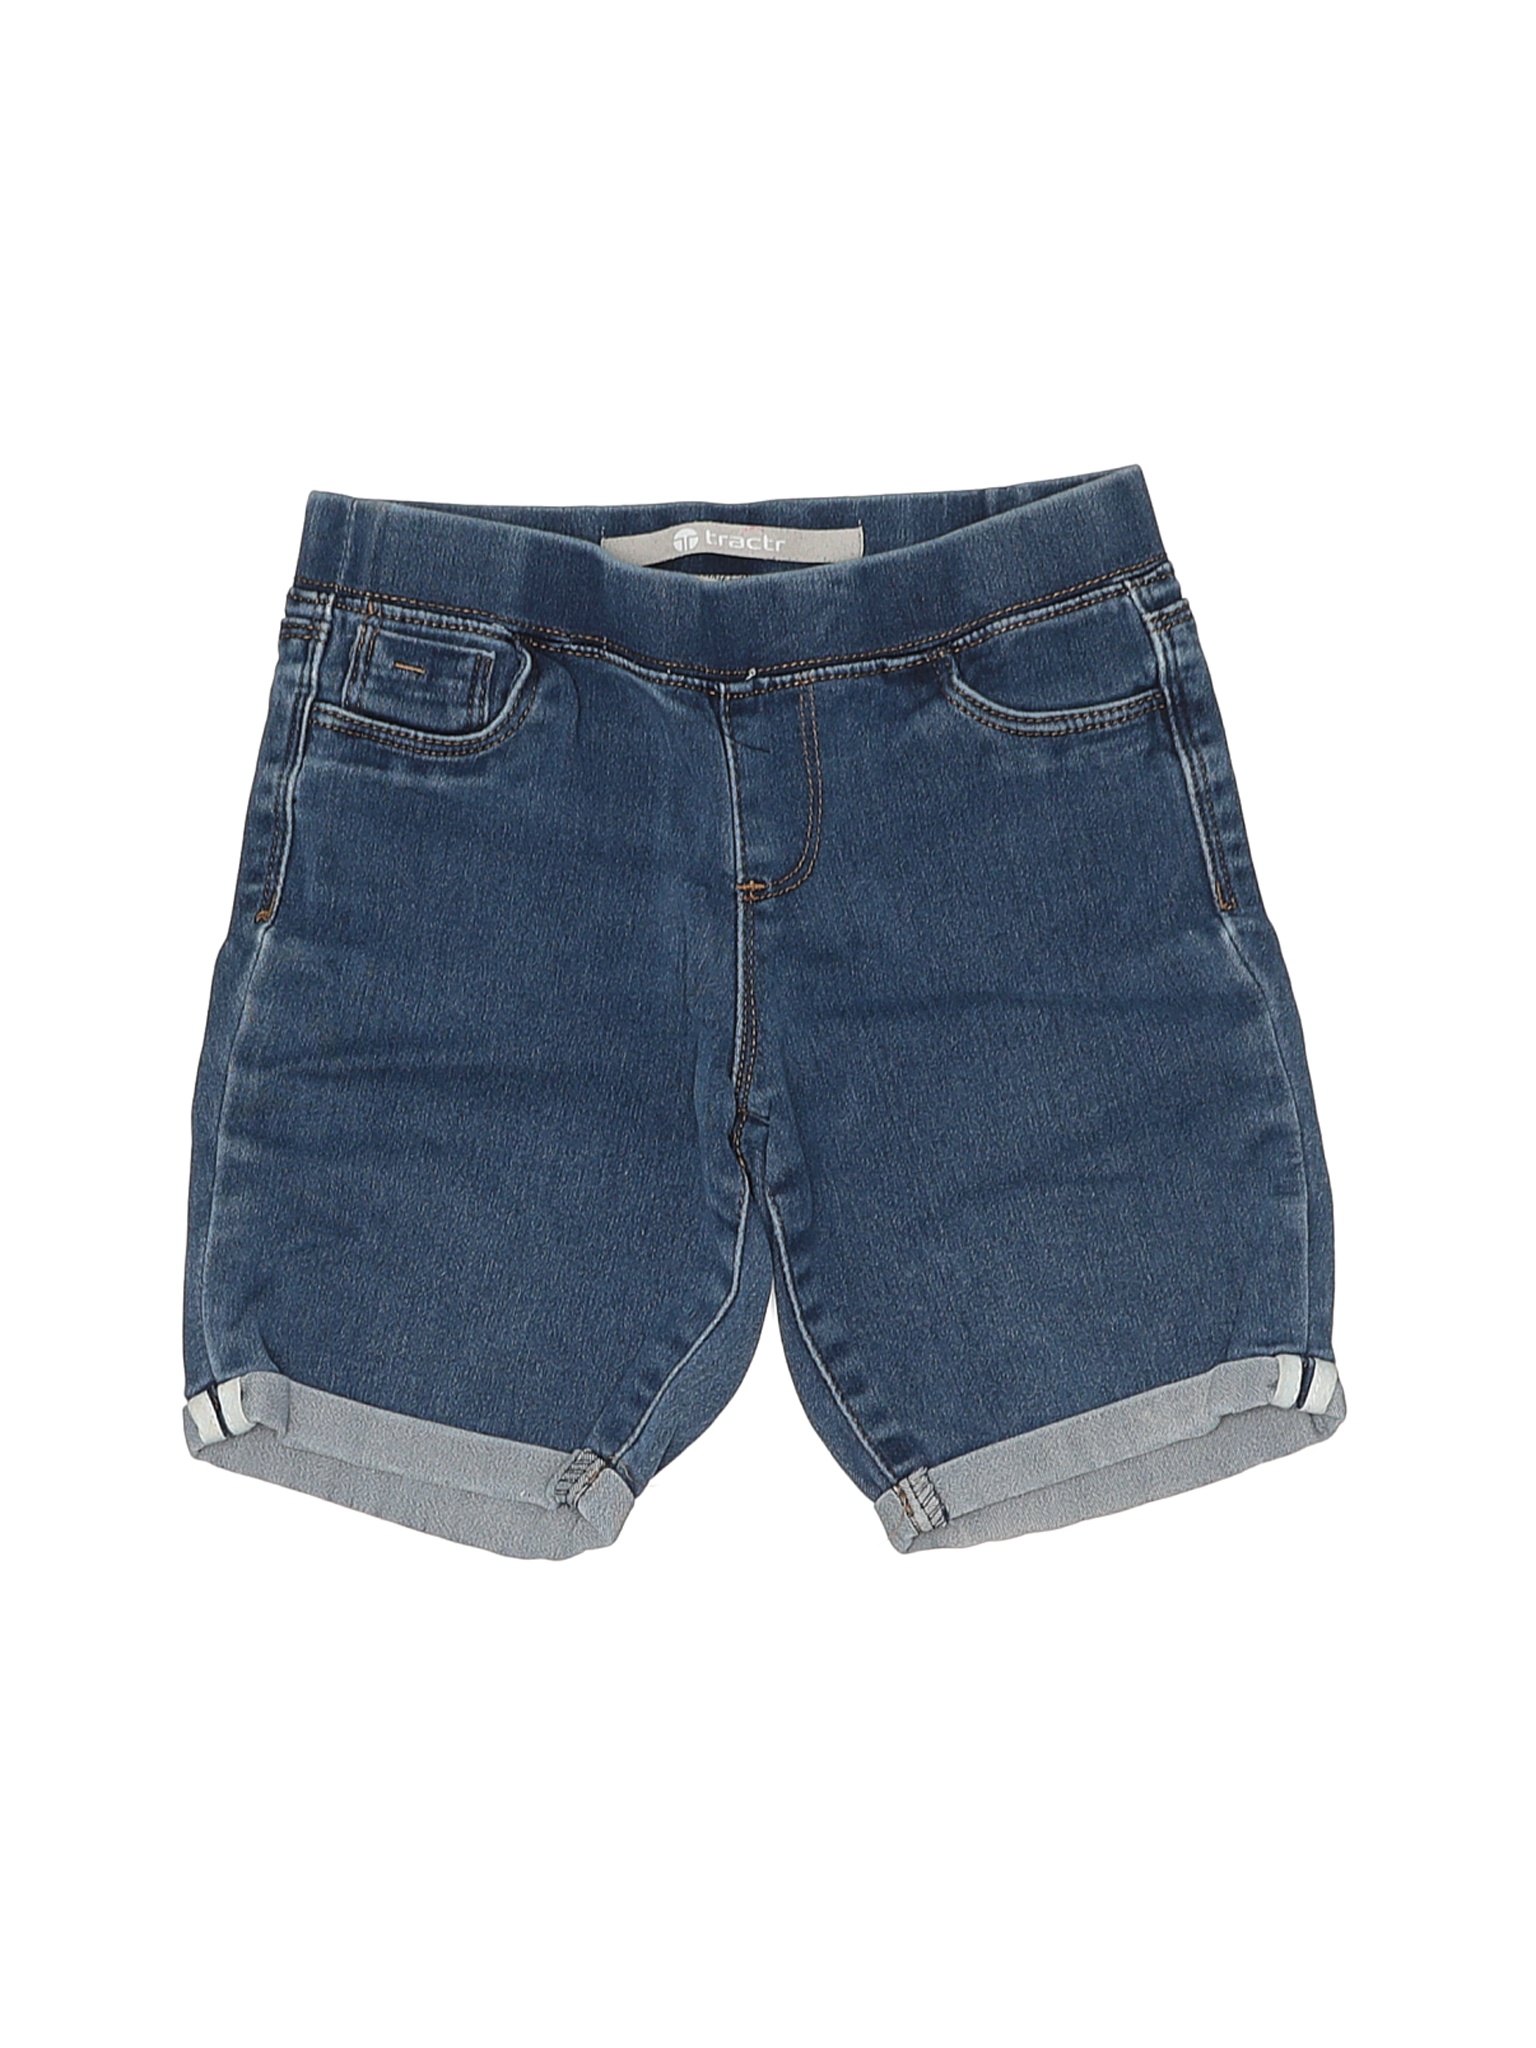 Tractr Girls Blue Denim Shorts 8 | eBay